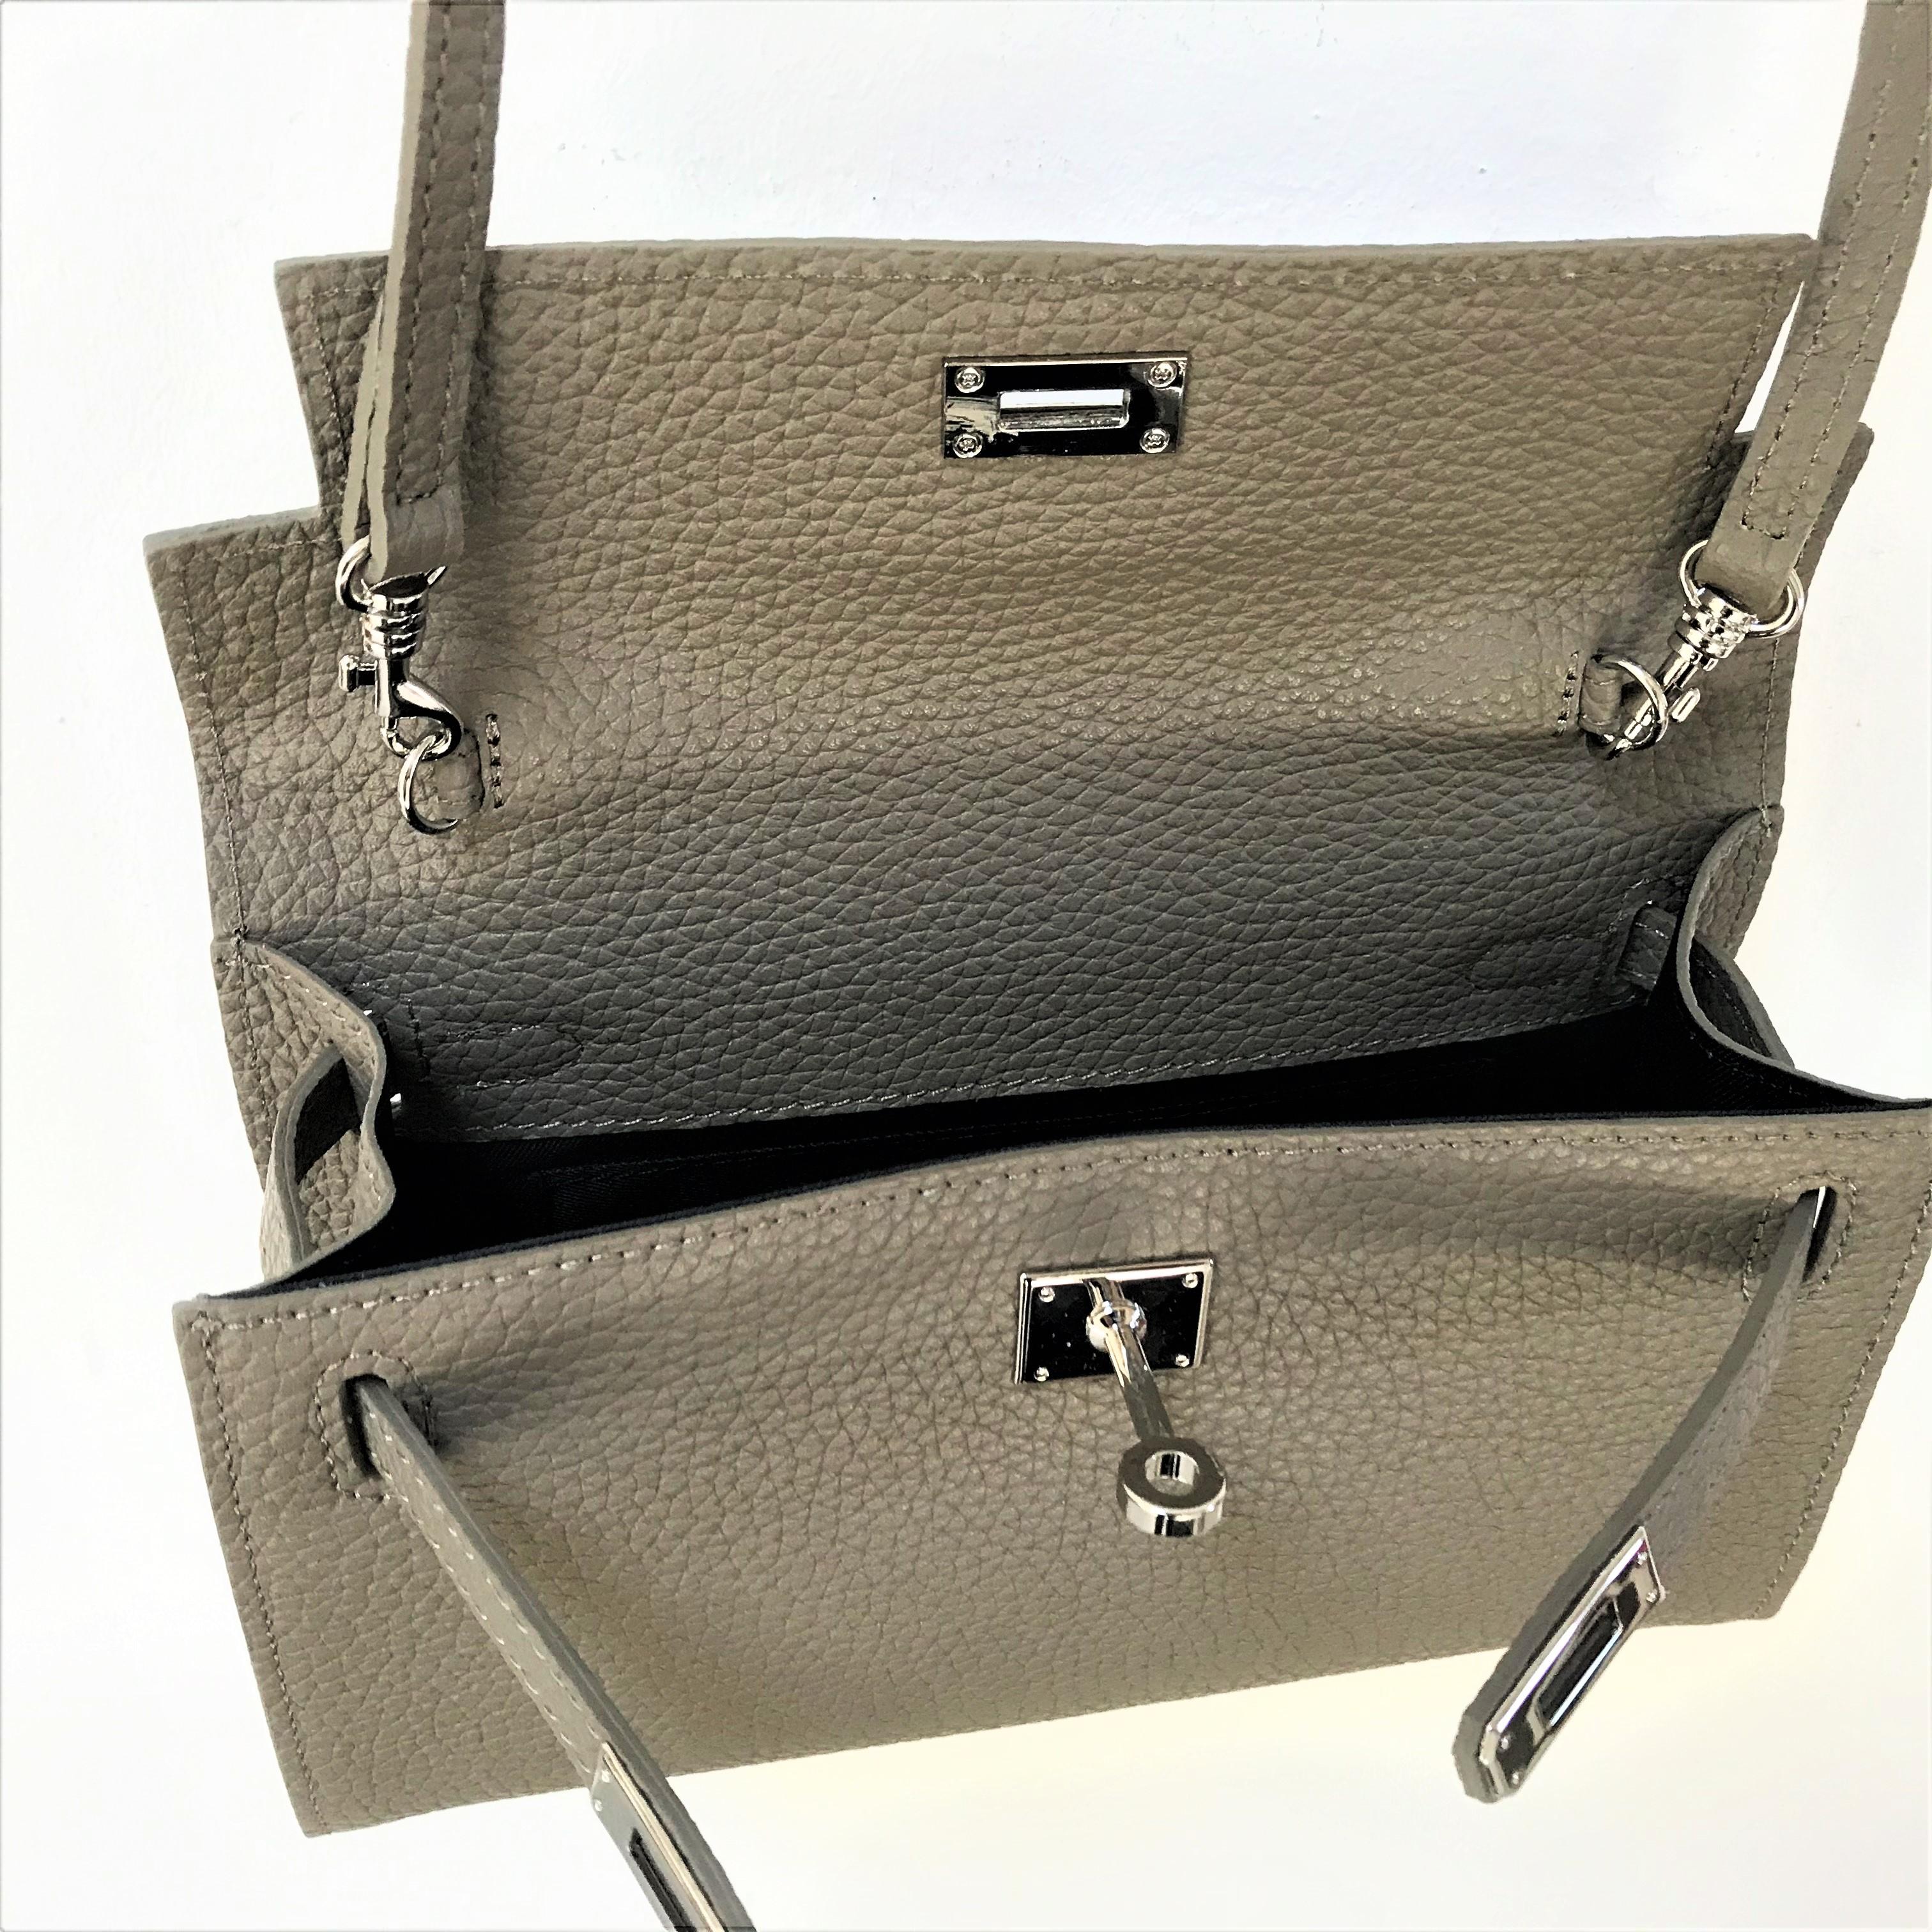 A new Pochette bag taub leather chourcheval with detachable shoulder strap  1